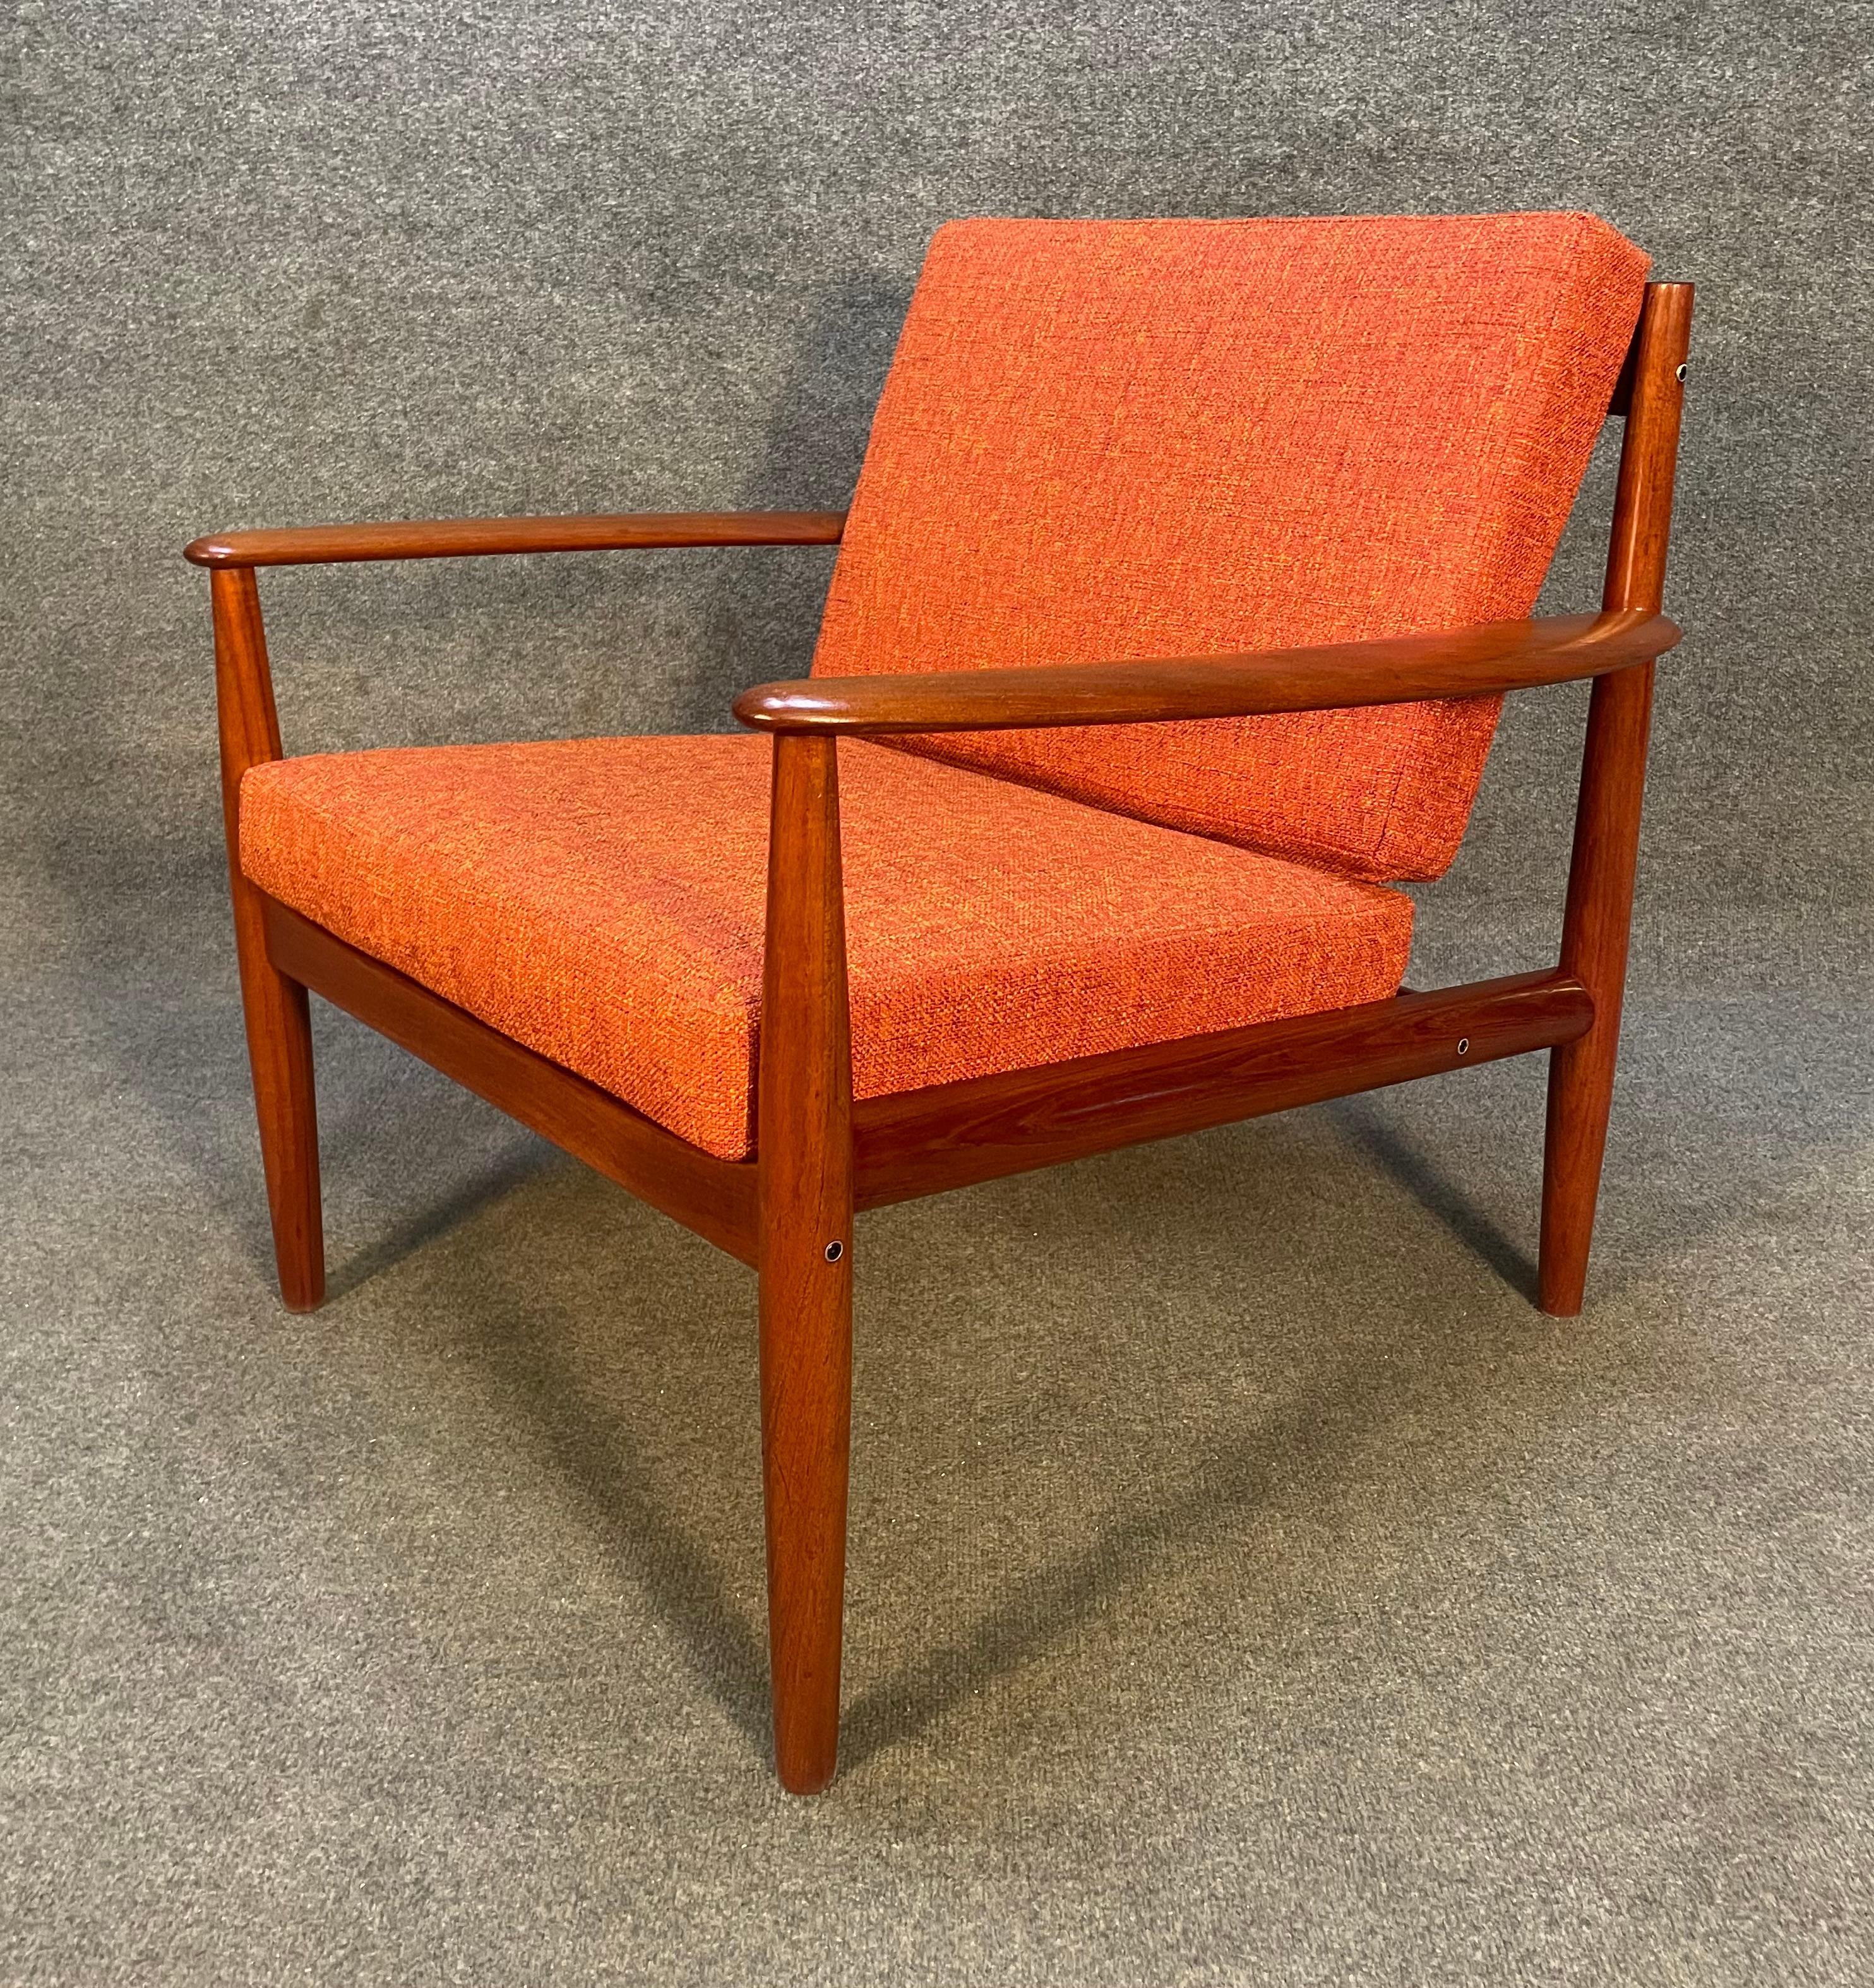 Vintage Danish Mid-Century Modern Teak Lounge Chair by Grete Jalk 1